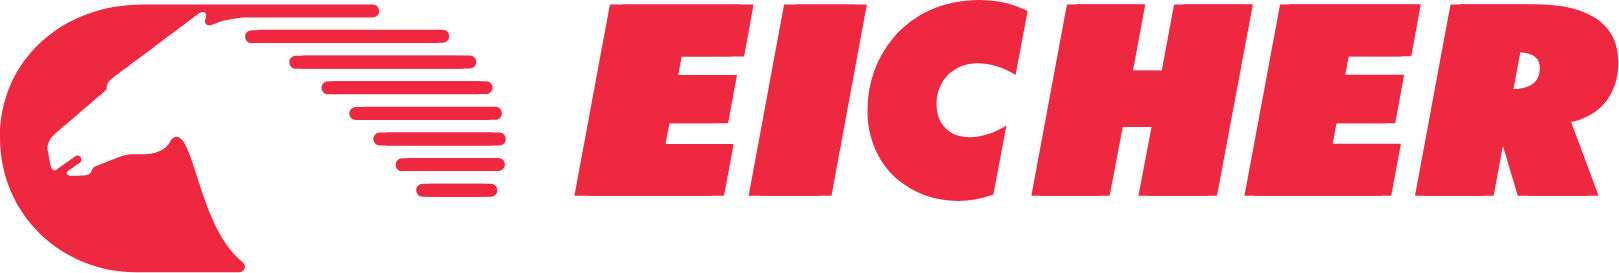 Eicher Motors logo large (transparent PNG)